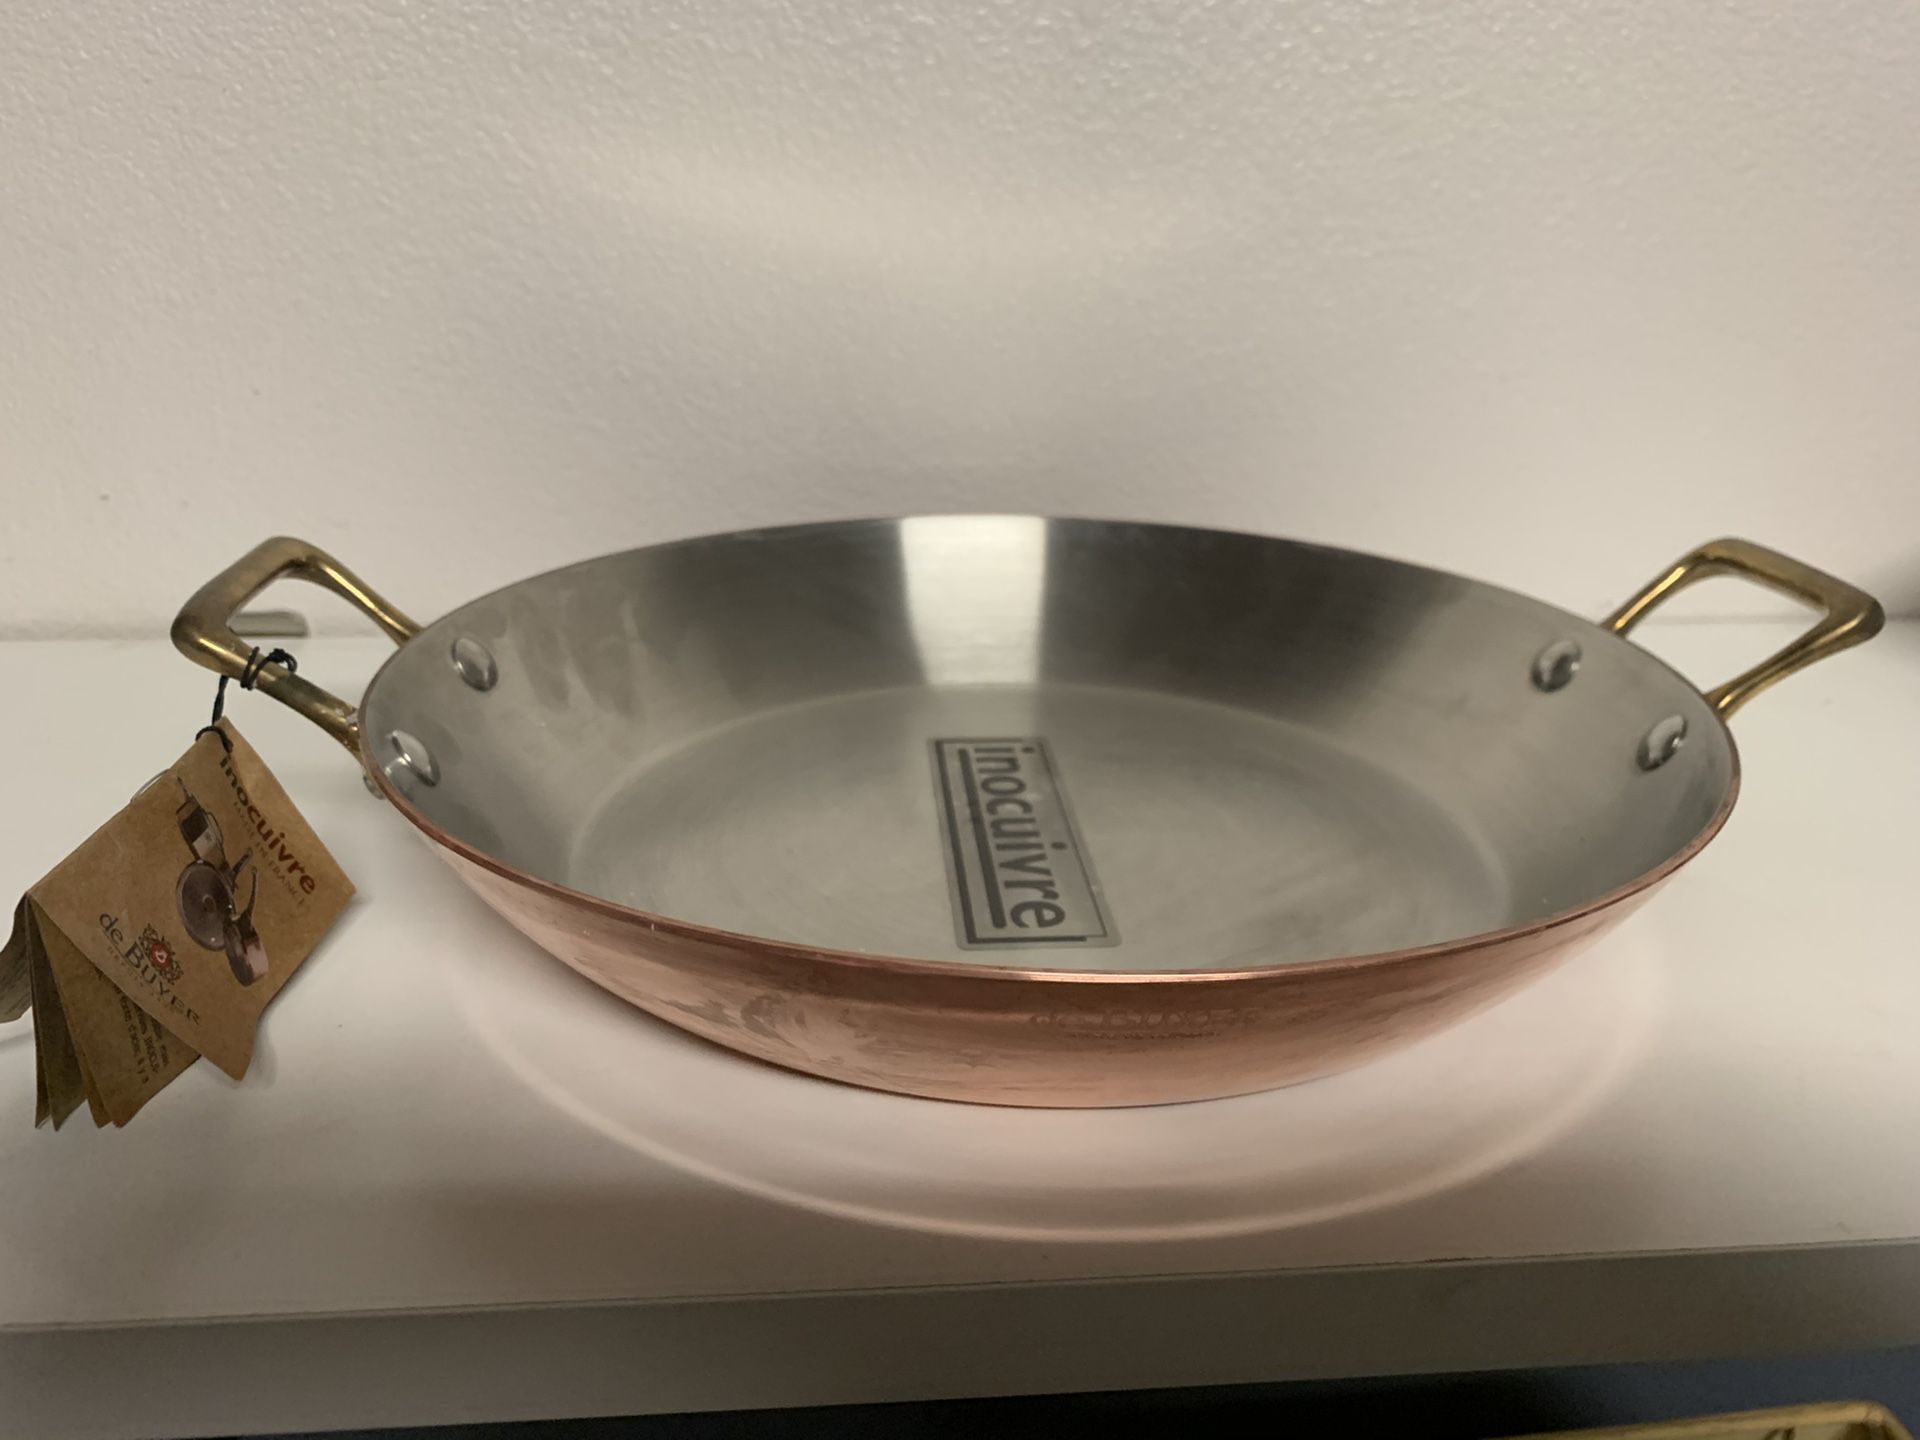 New DeBuyer Round Copper Pan